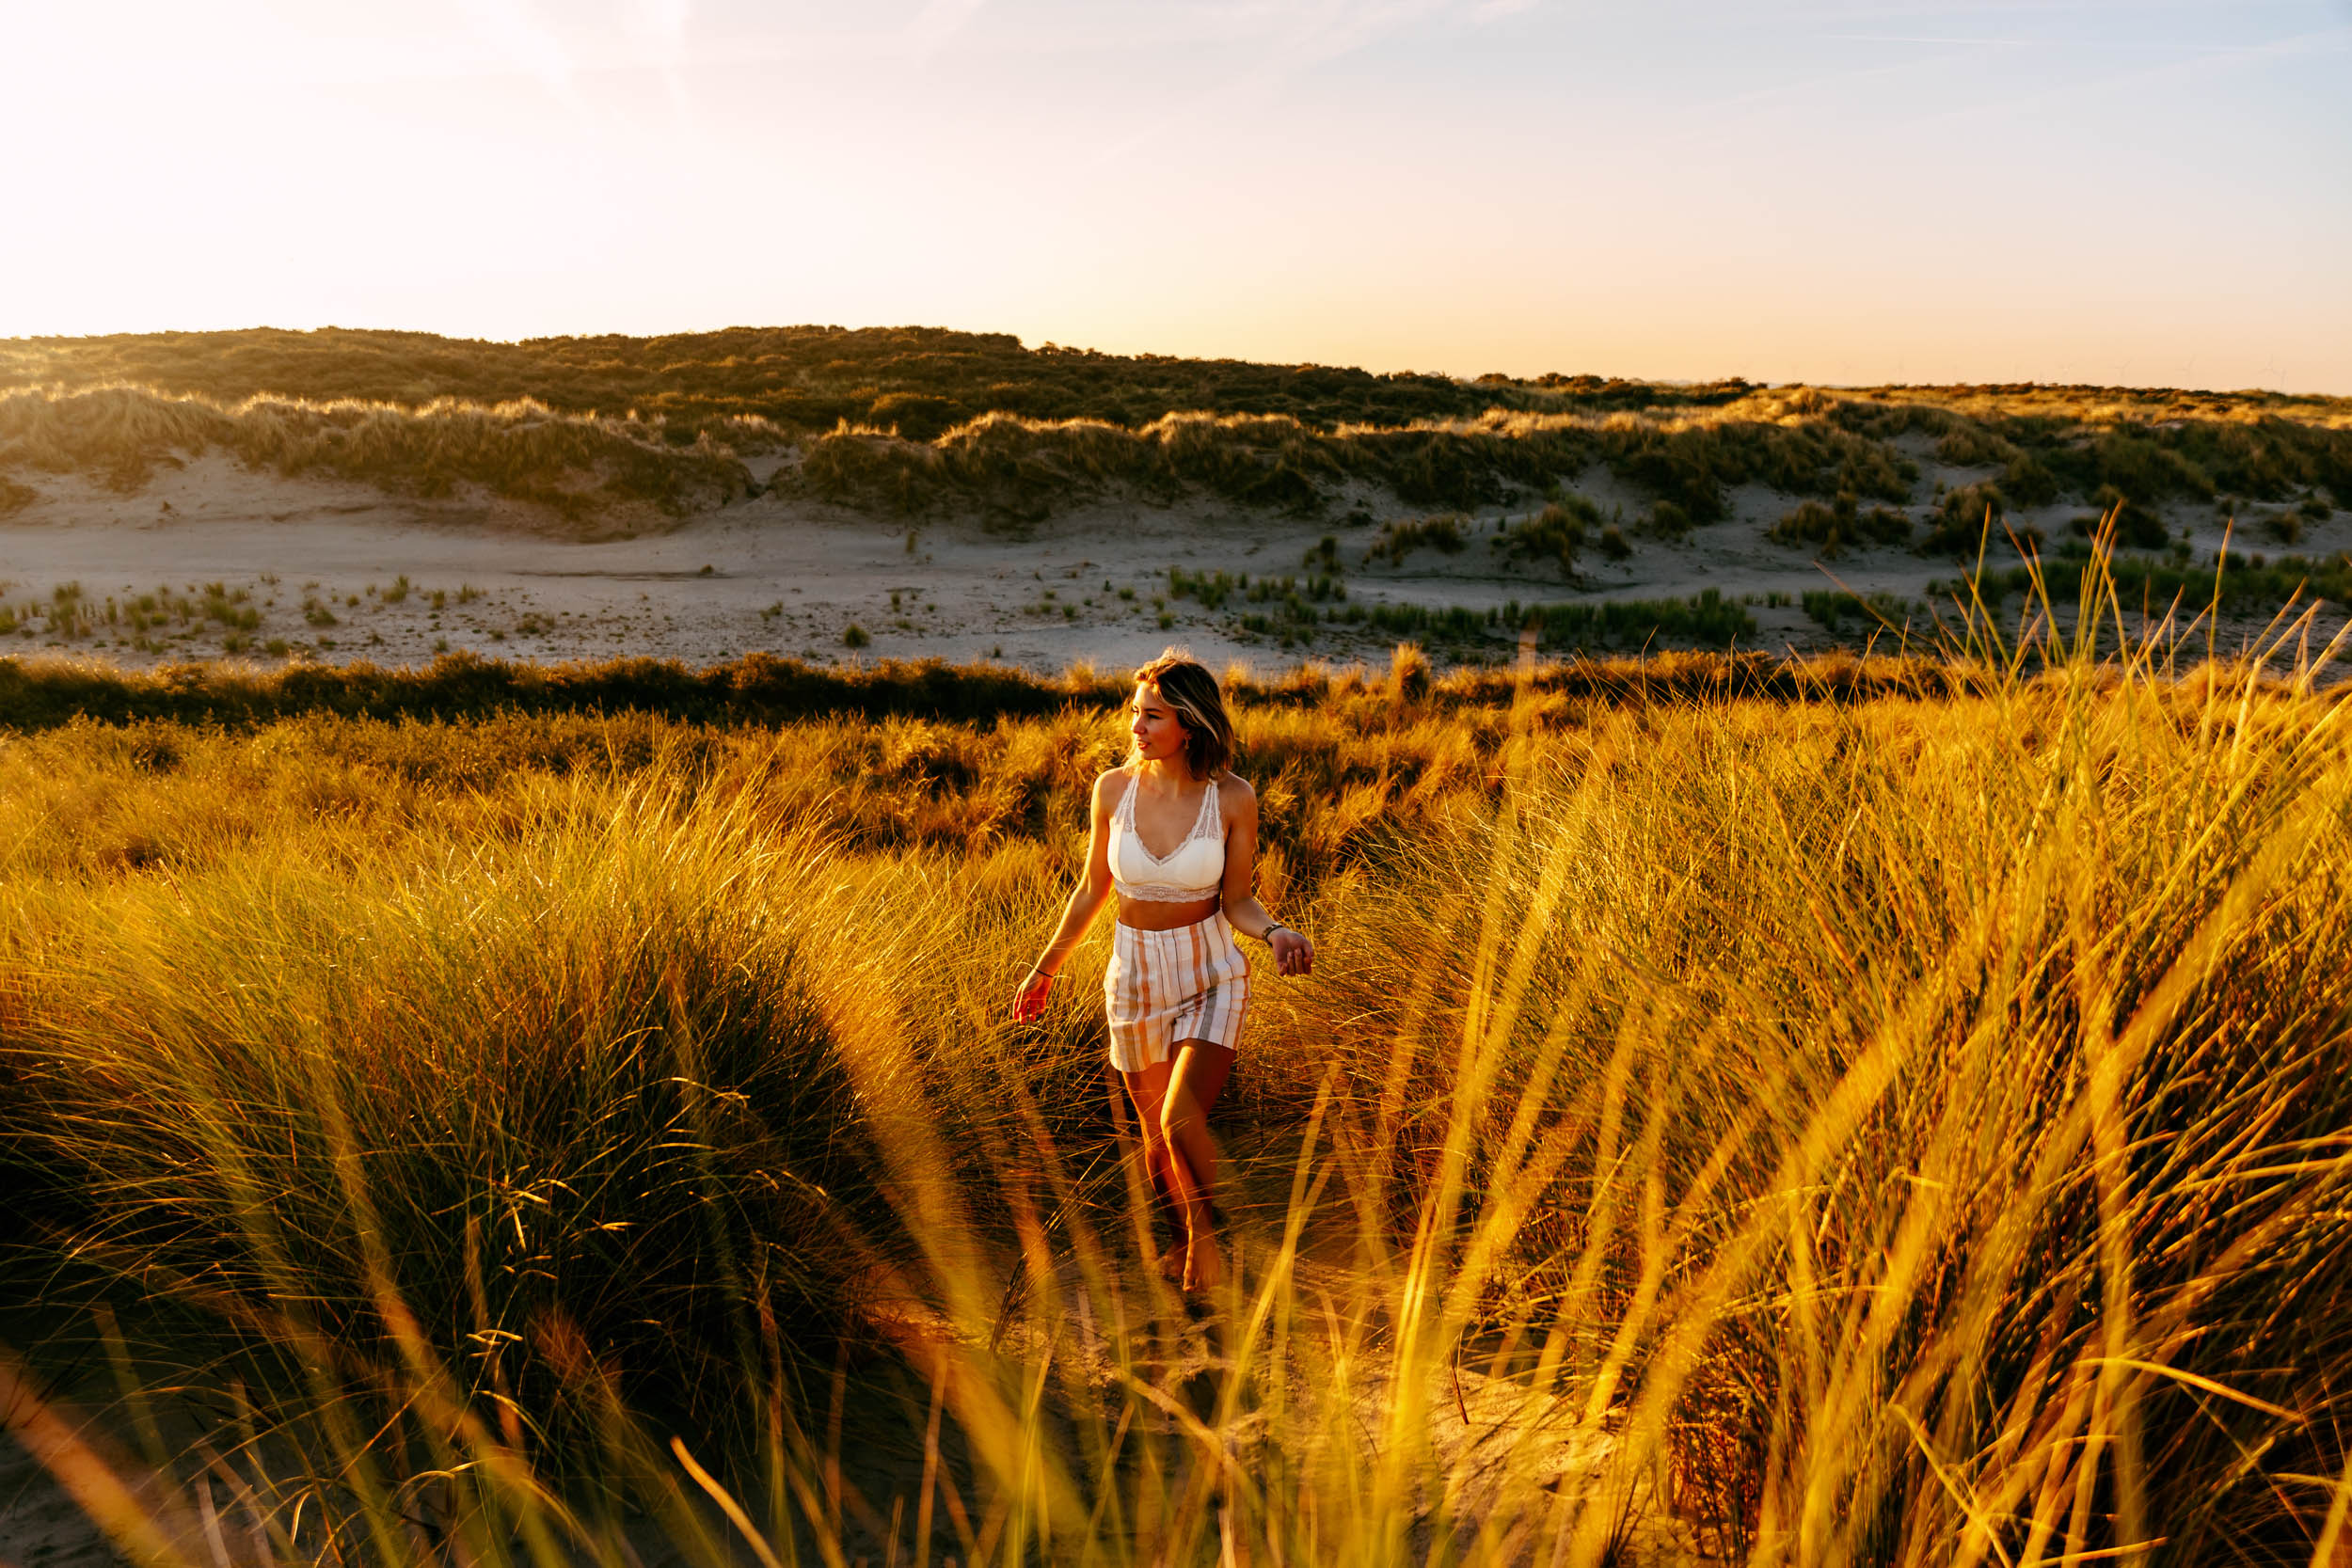 A woman strolling through tall grass at sunset, captured in beach photos.